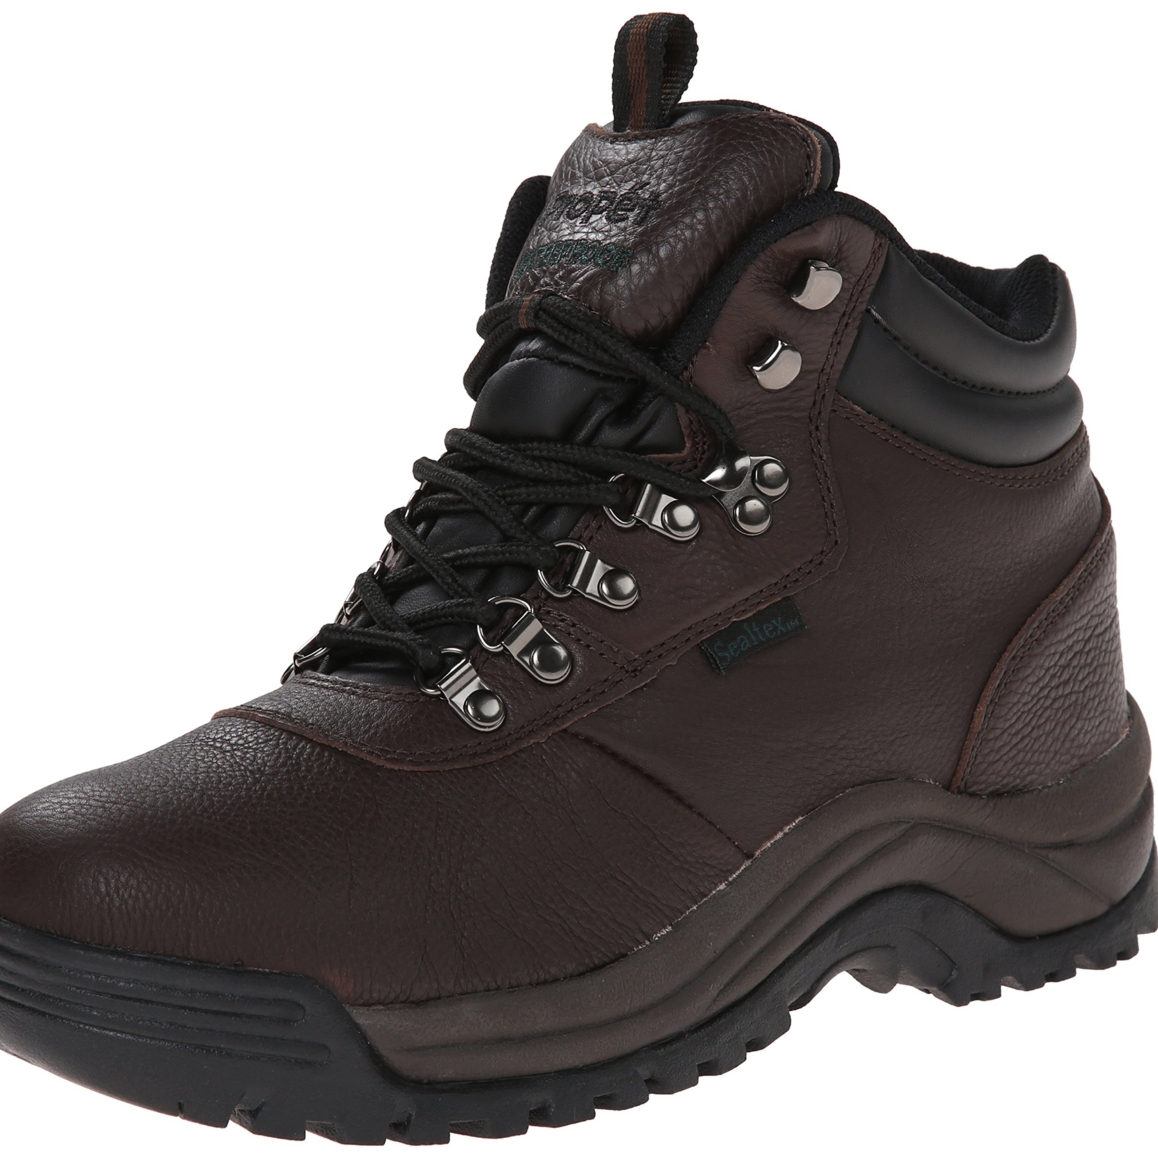 Propet Men's Cliff Walker Hiking Boot Bronco Brown - M3188BRO - BRONCO BROWN, 12-2E